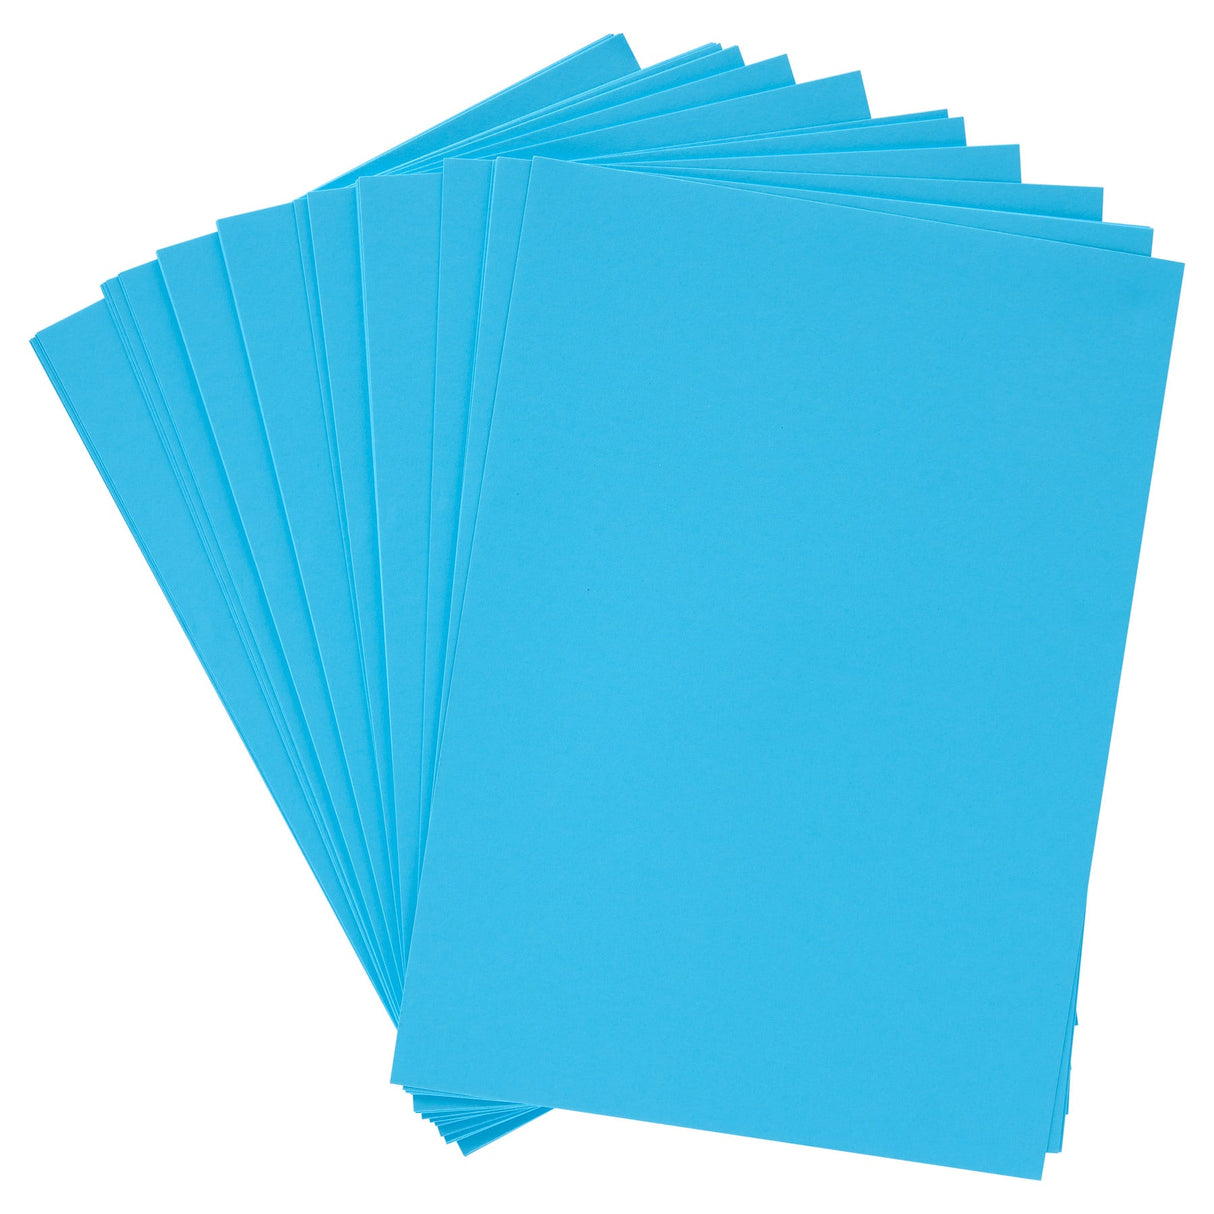 Premier Activity A4 Card - 160 gsm - Turquoise - 50 Sheets-Craft Paper & Card-Premier|StationeryShop.co.uk